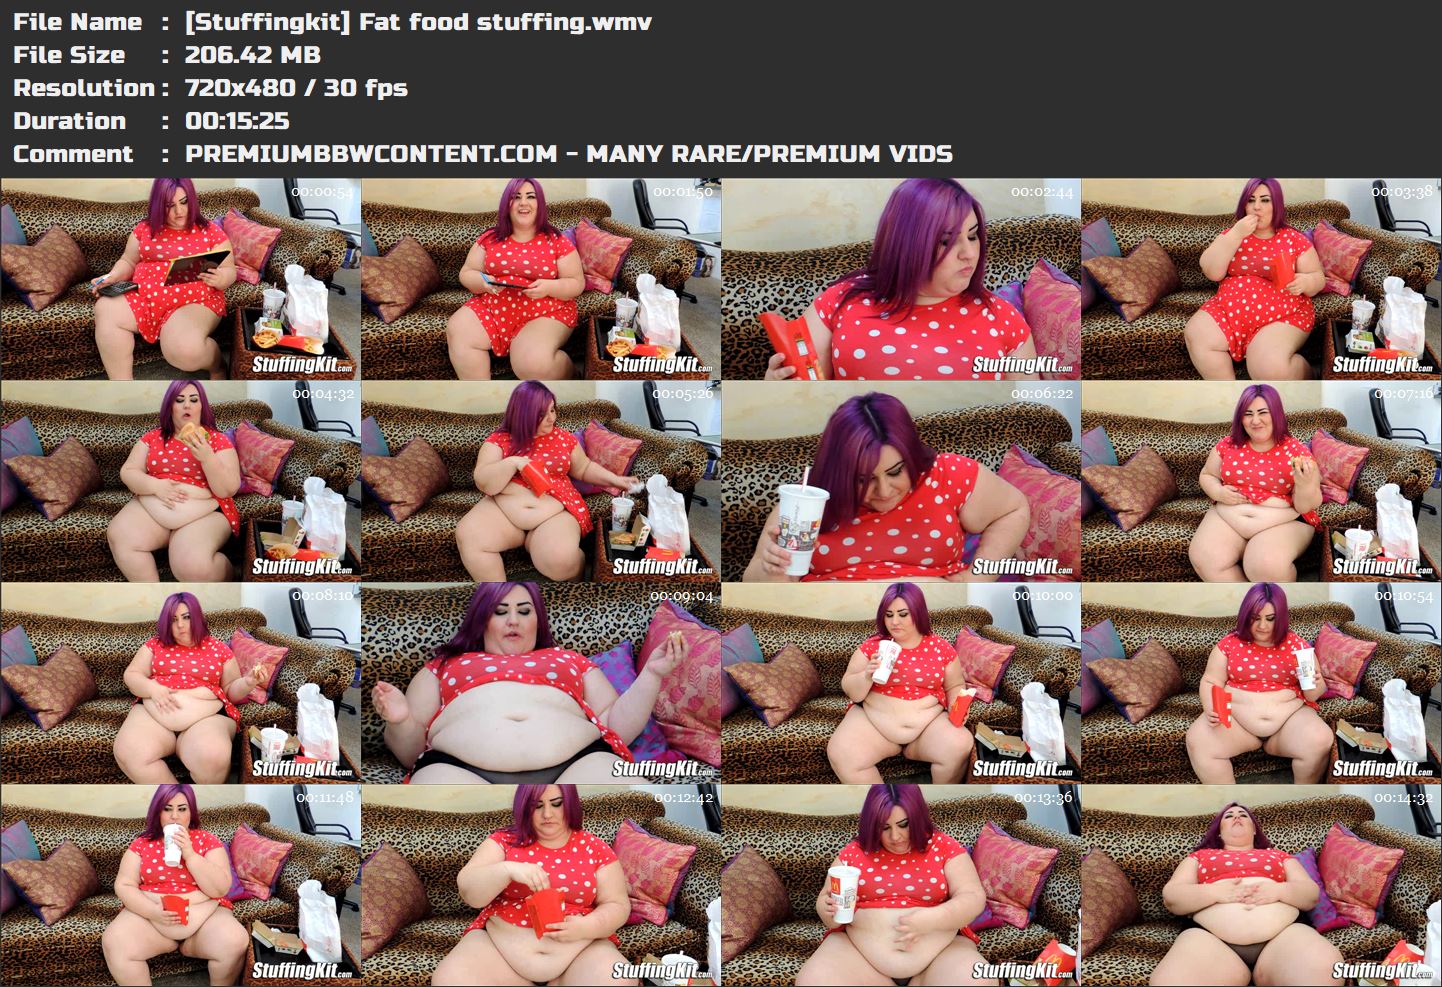 [Stuffingkit] Fat food stuffing thumbnails